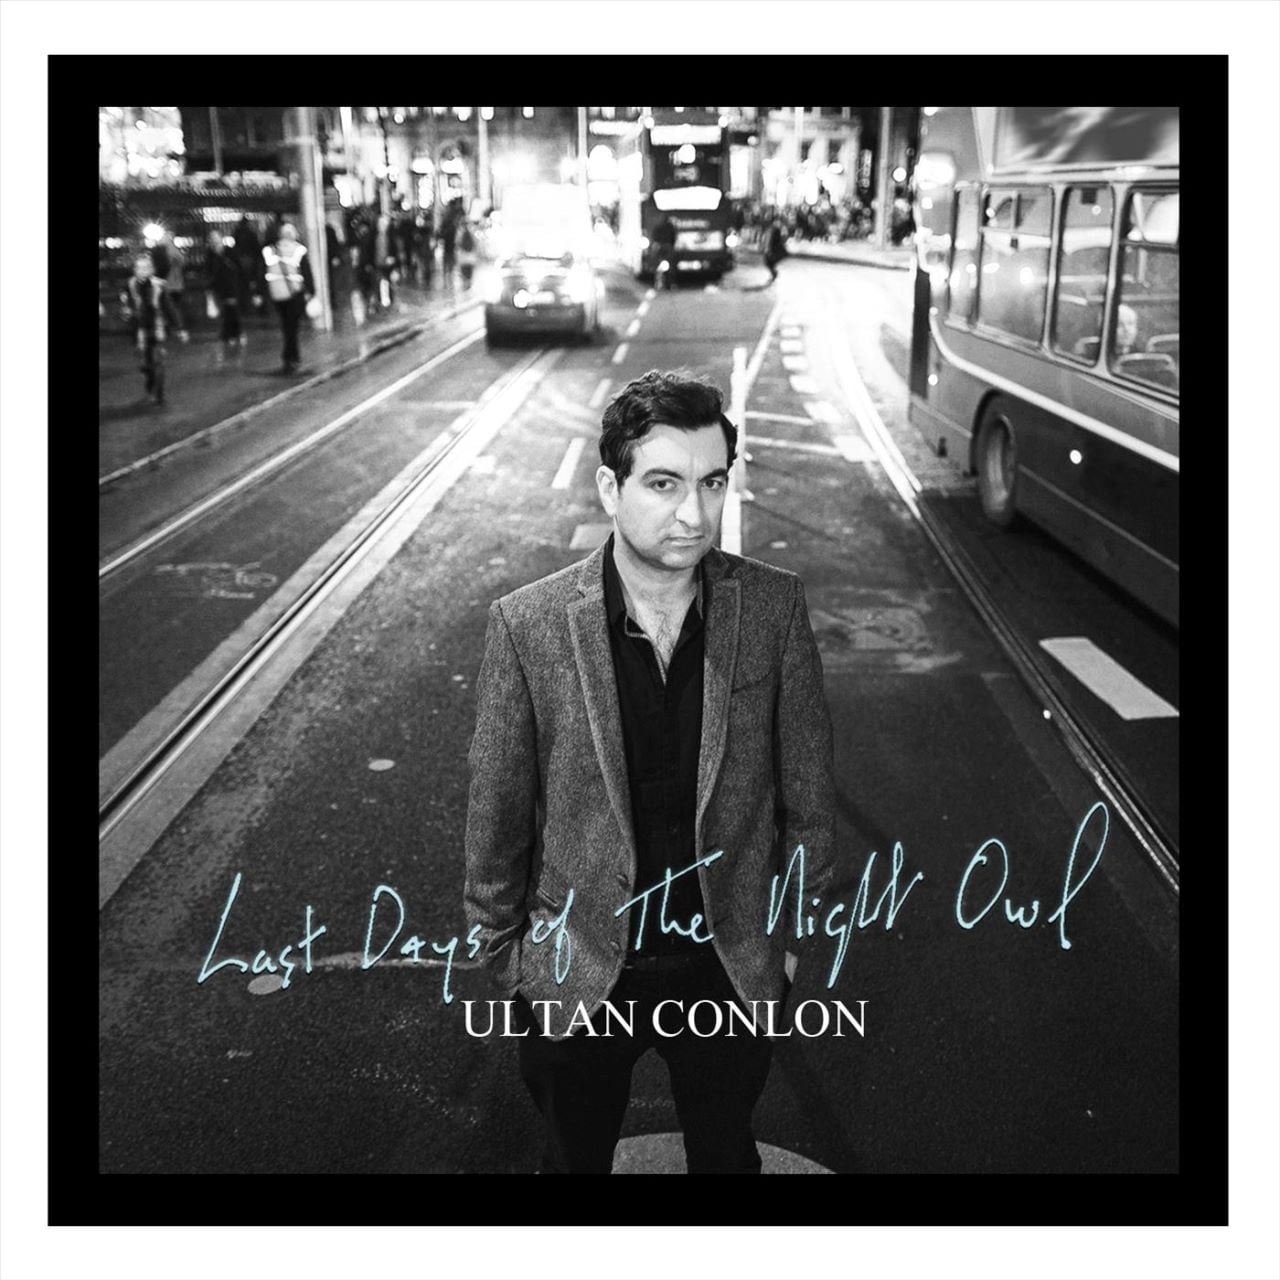 Ultan Conlon - Last Days Of The Night Owl cover album